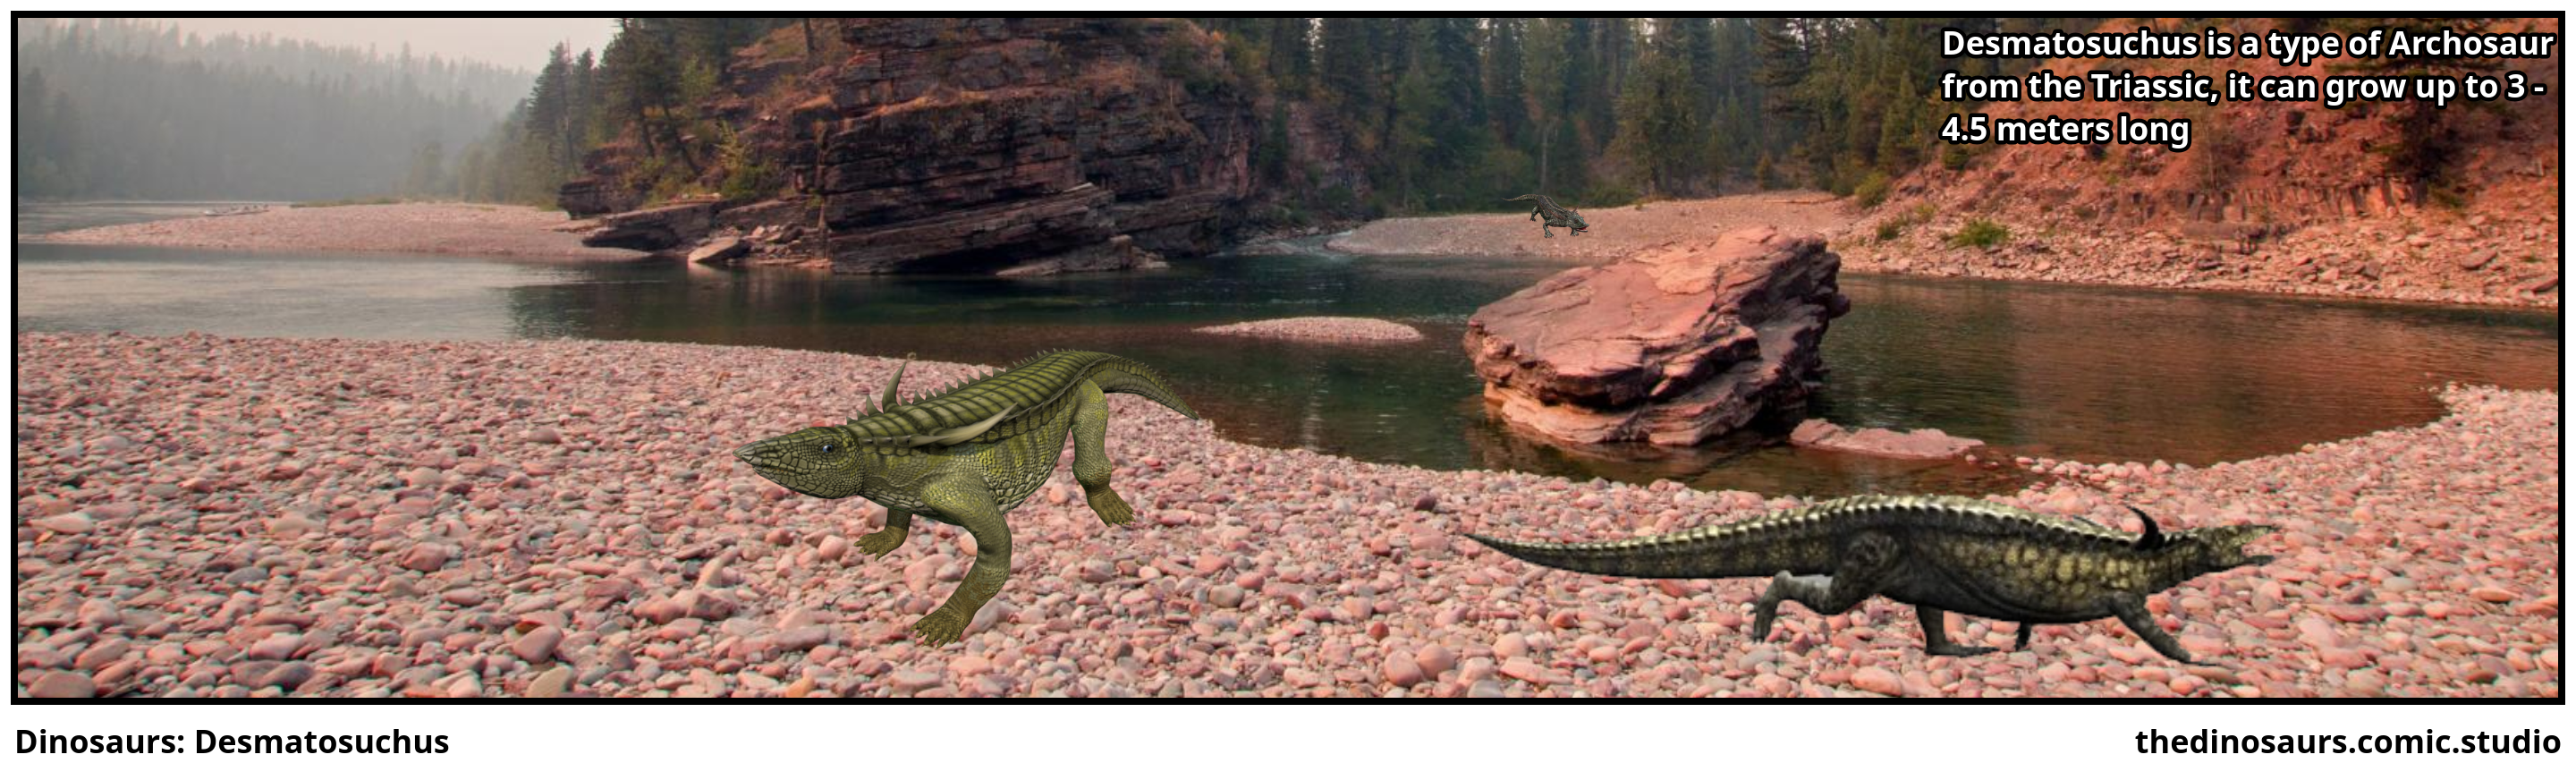 Dinosaurs: Desmatosuchus